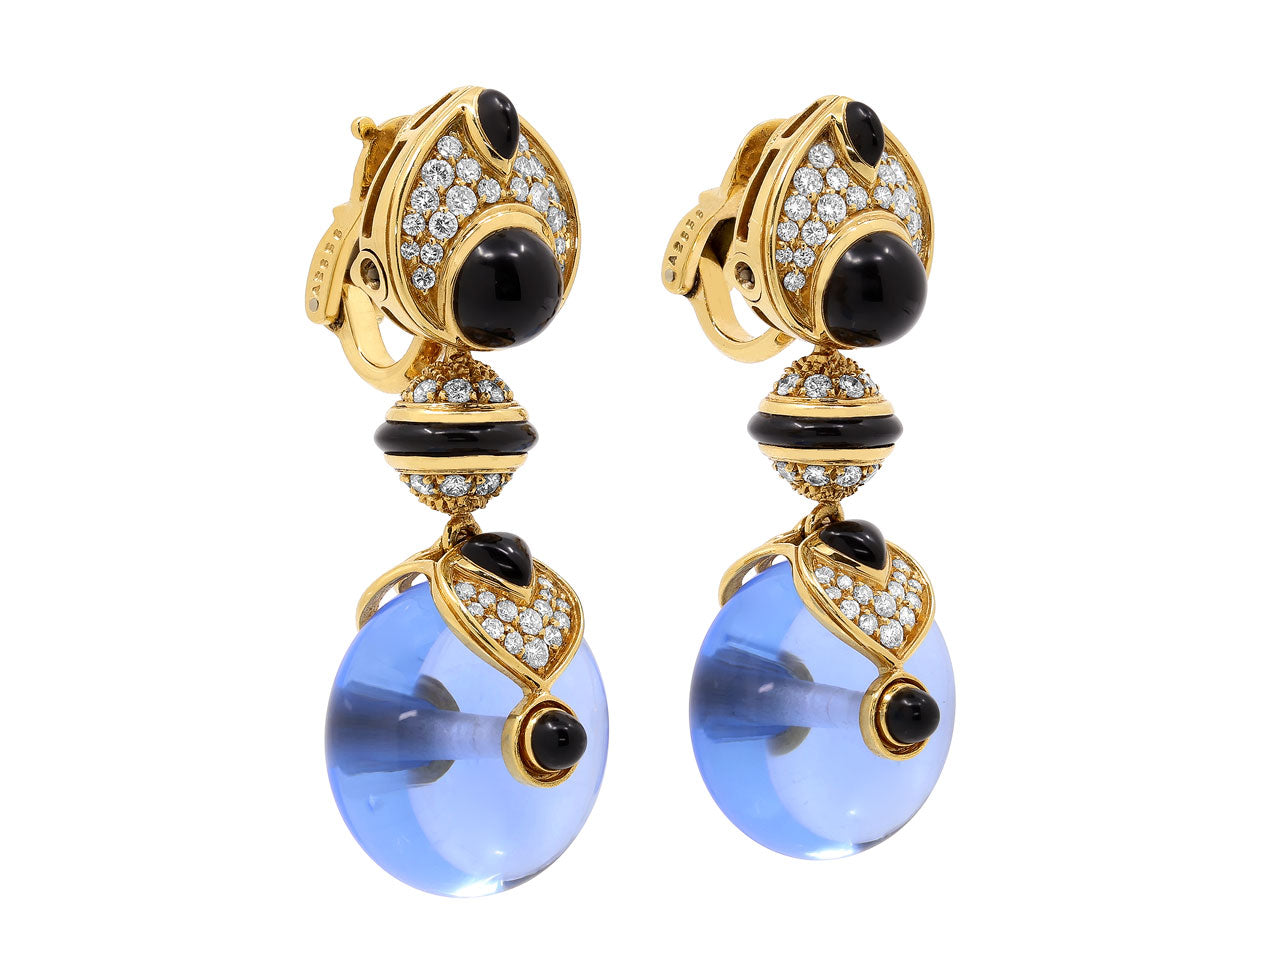 Marina B. 'Pneu' Black Jade, Quartz and Pavé Diamond Earclips in 18K Gold